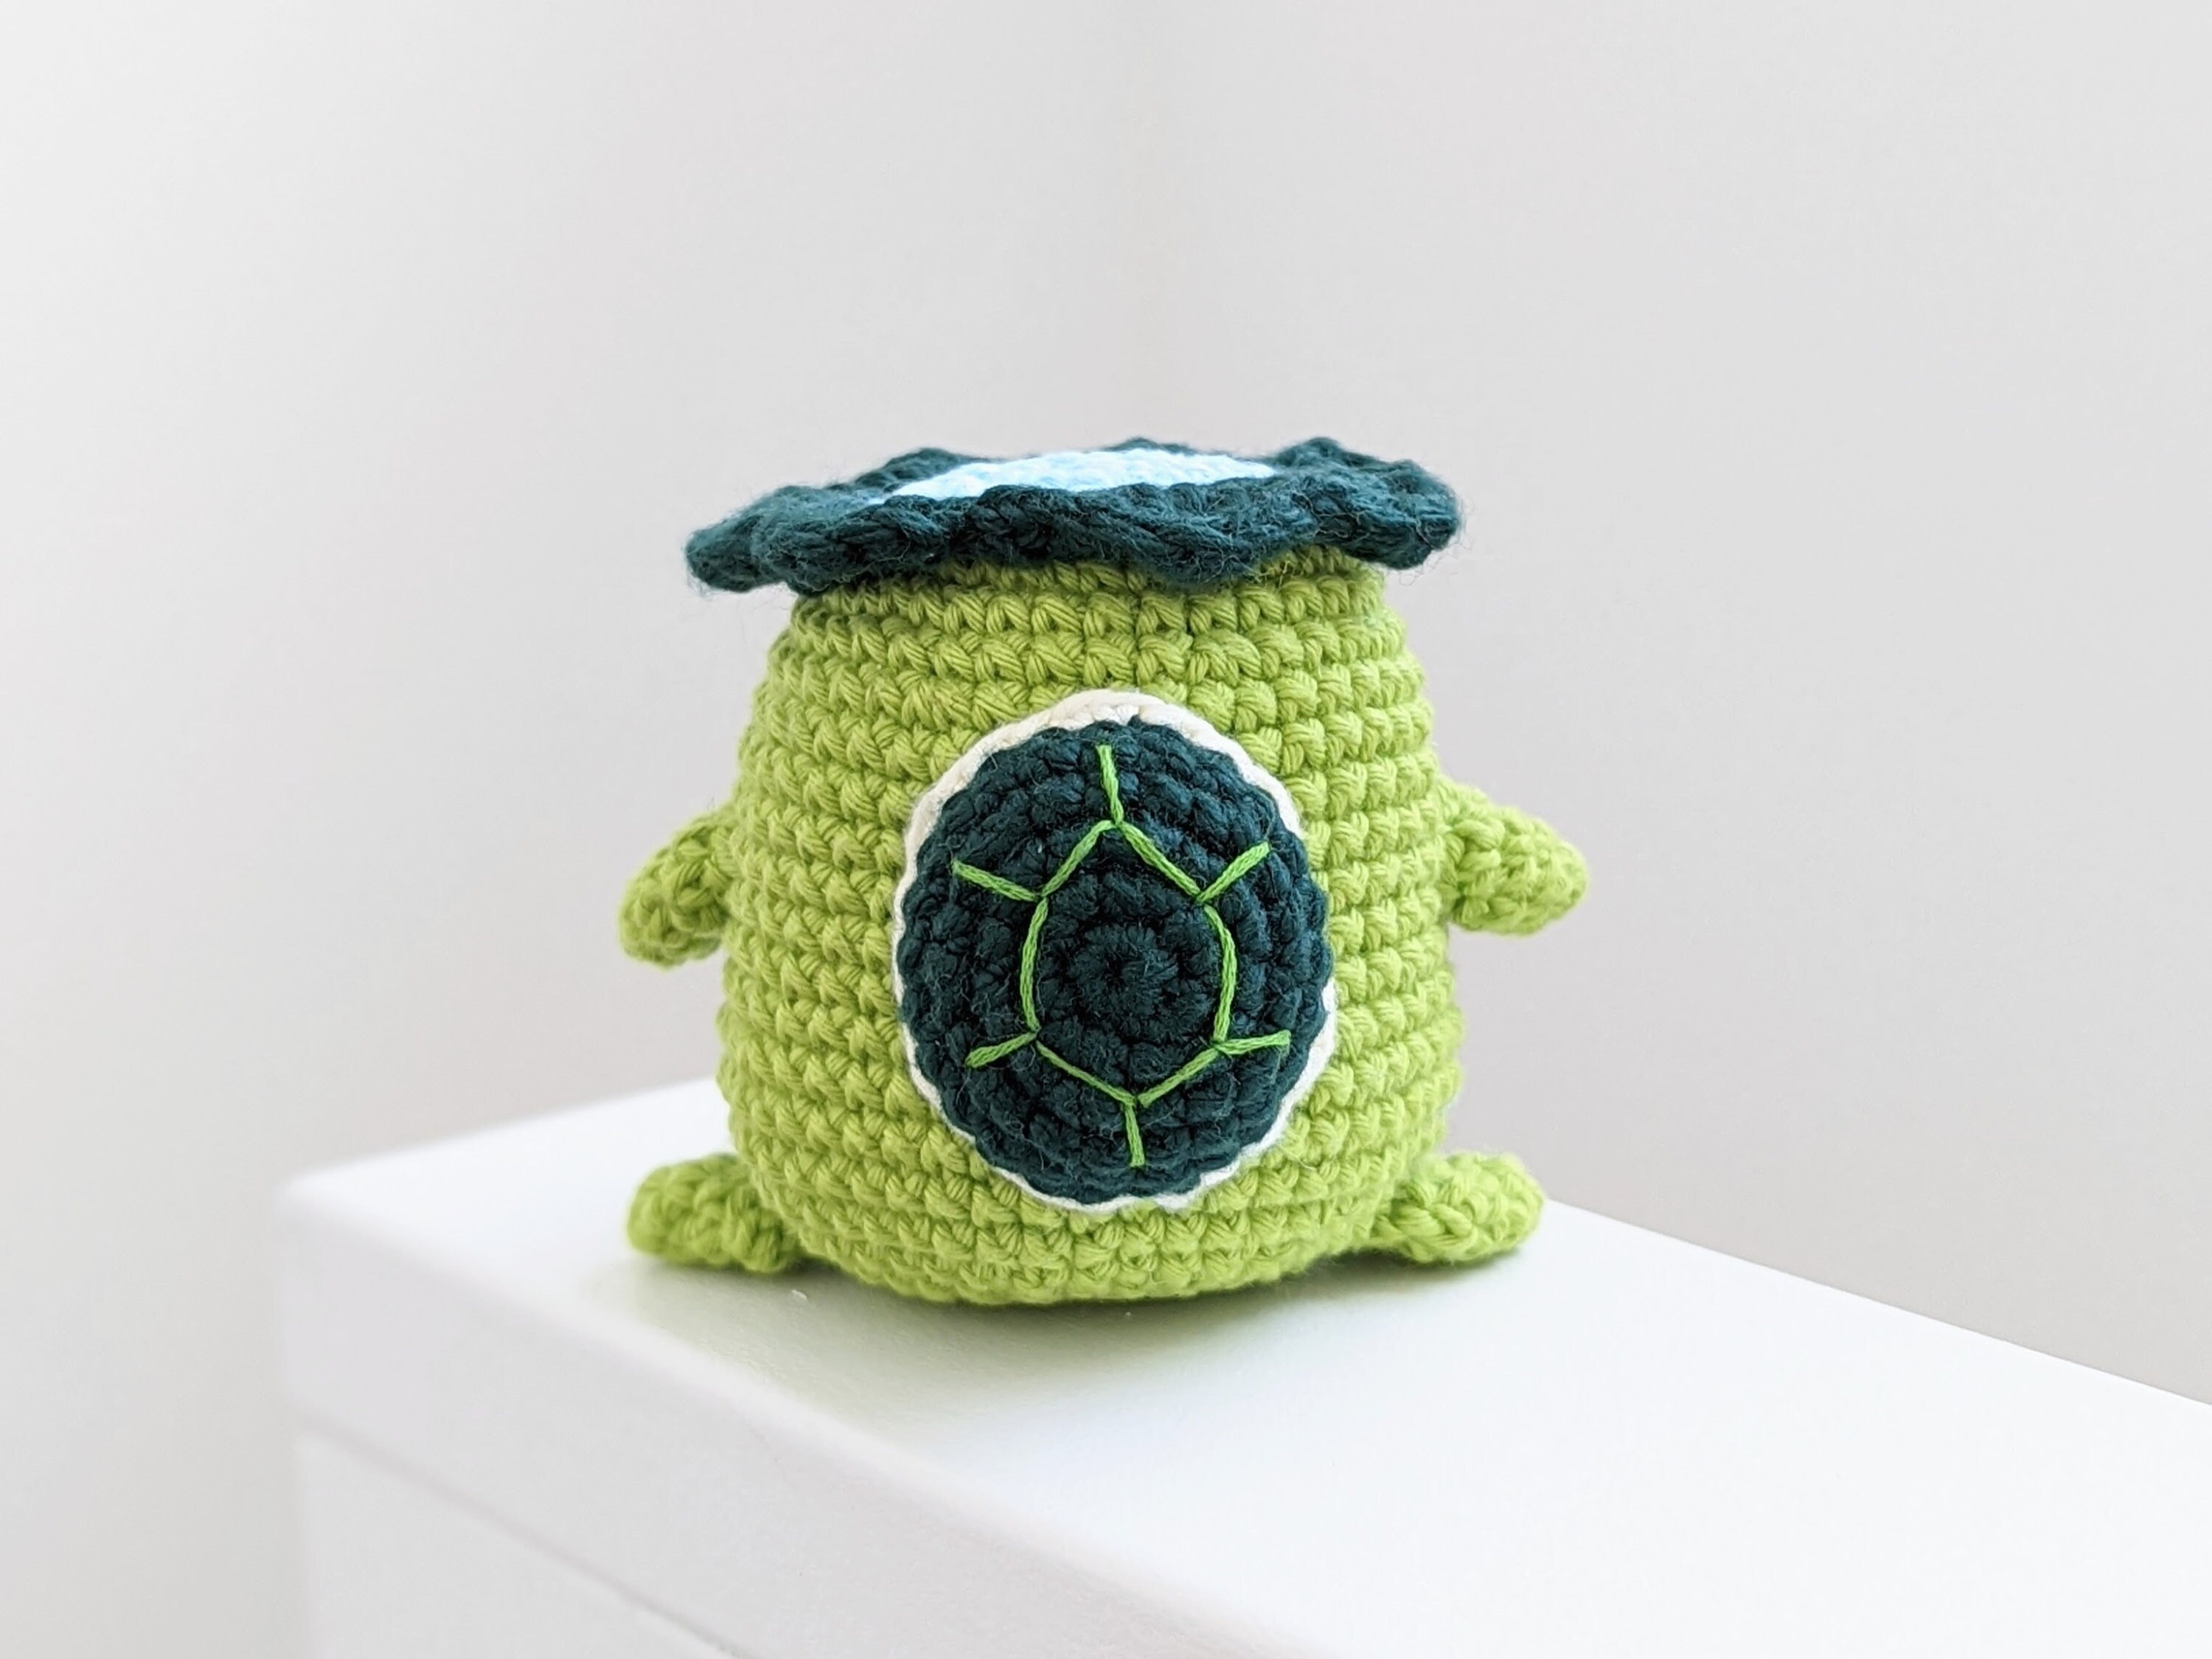 Kappa Yokai Kawaii: Crochet pattern